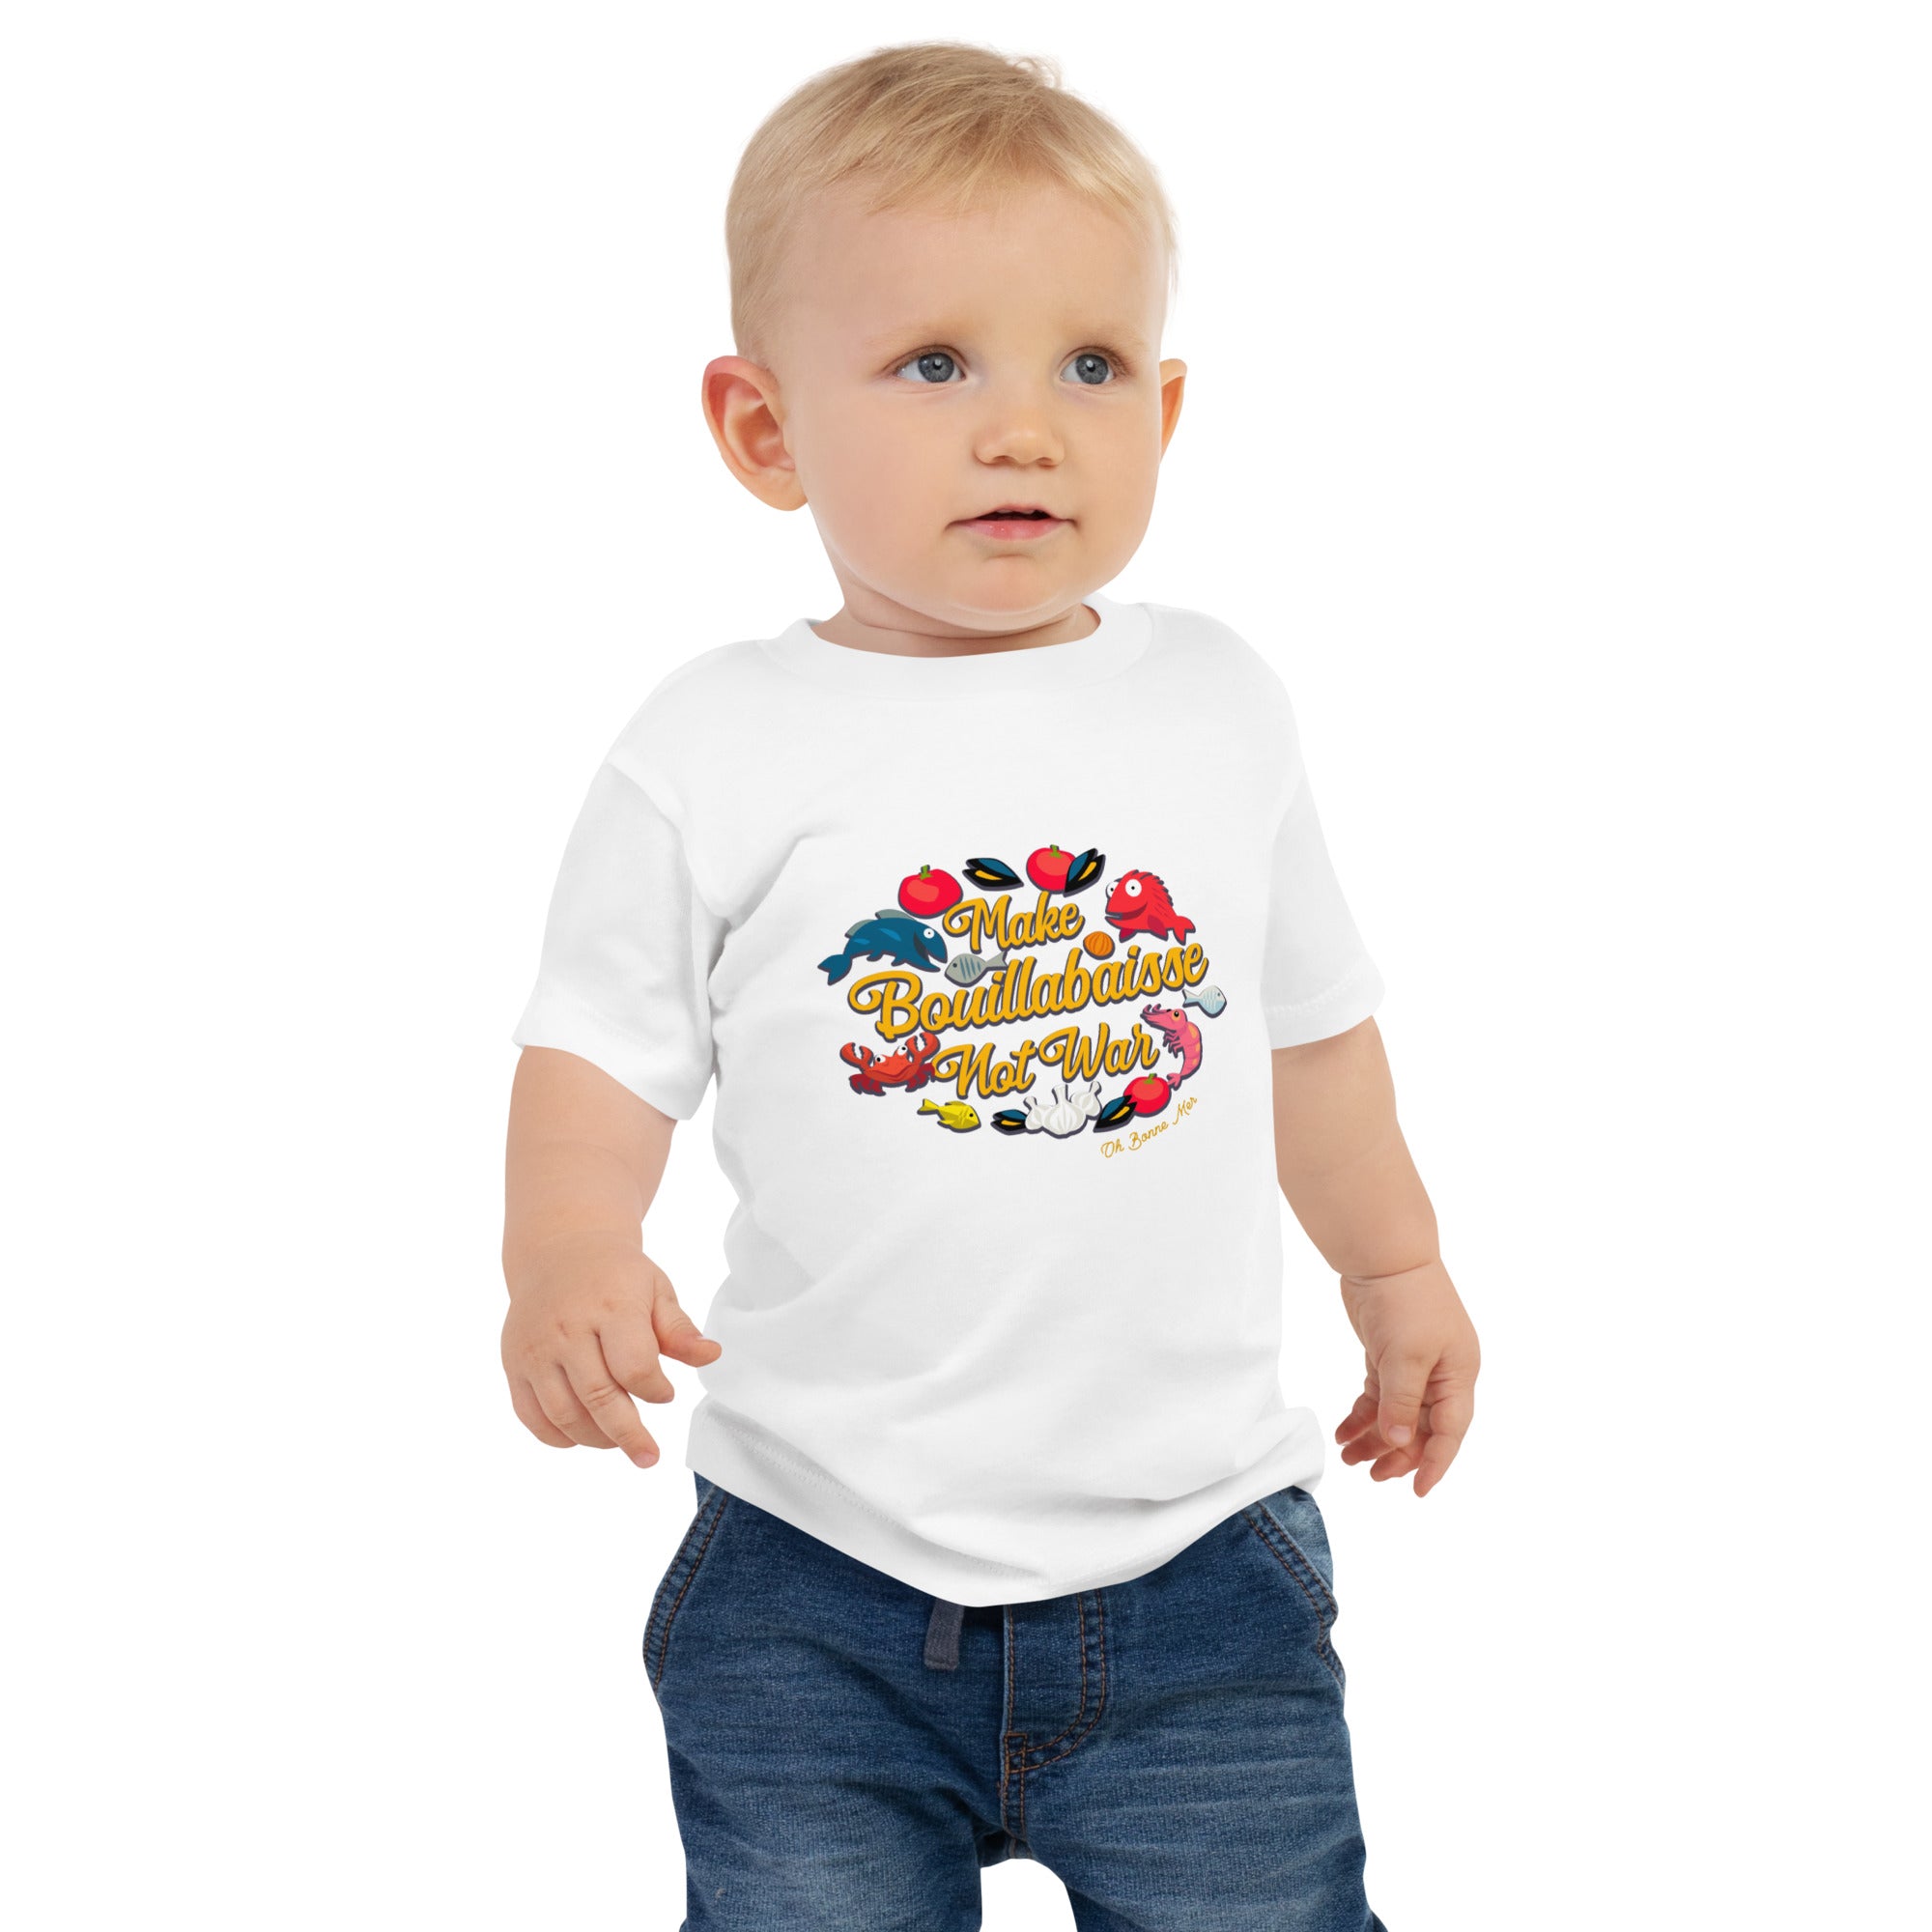 Baby T-shirt Make Bouillabaisse Not War